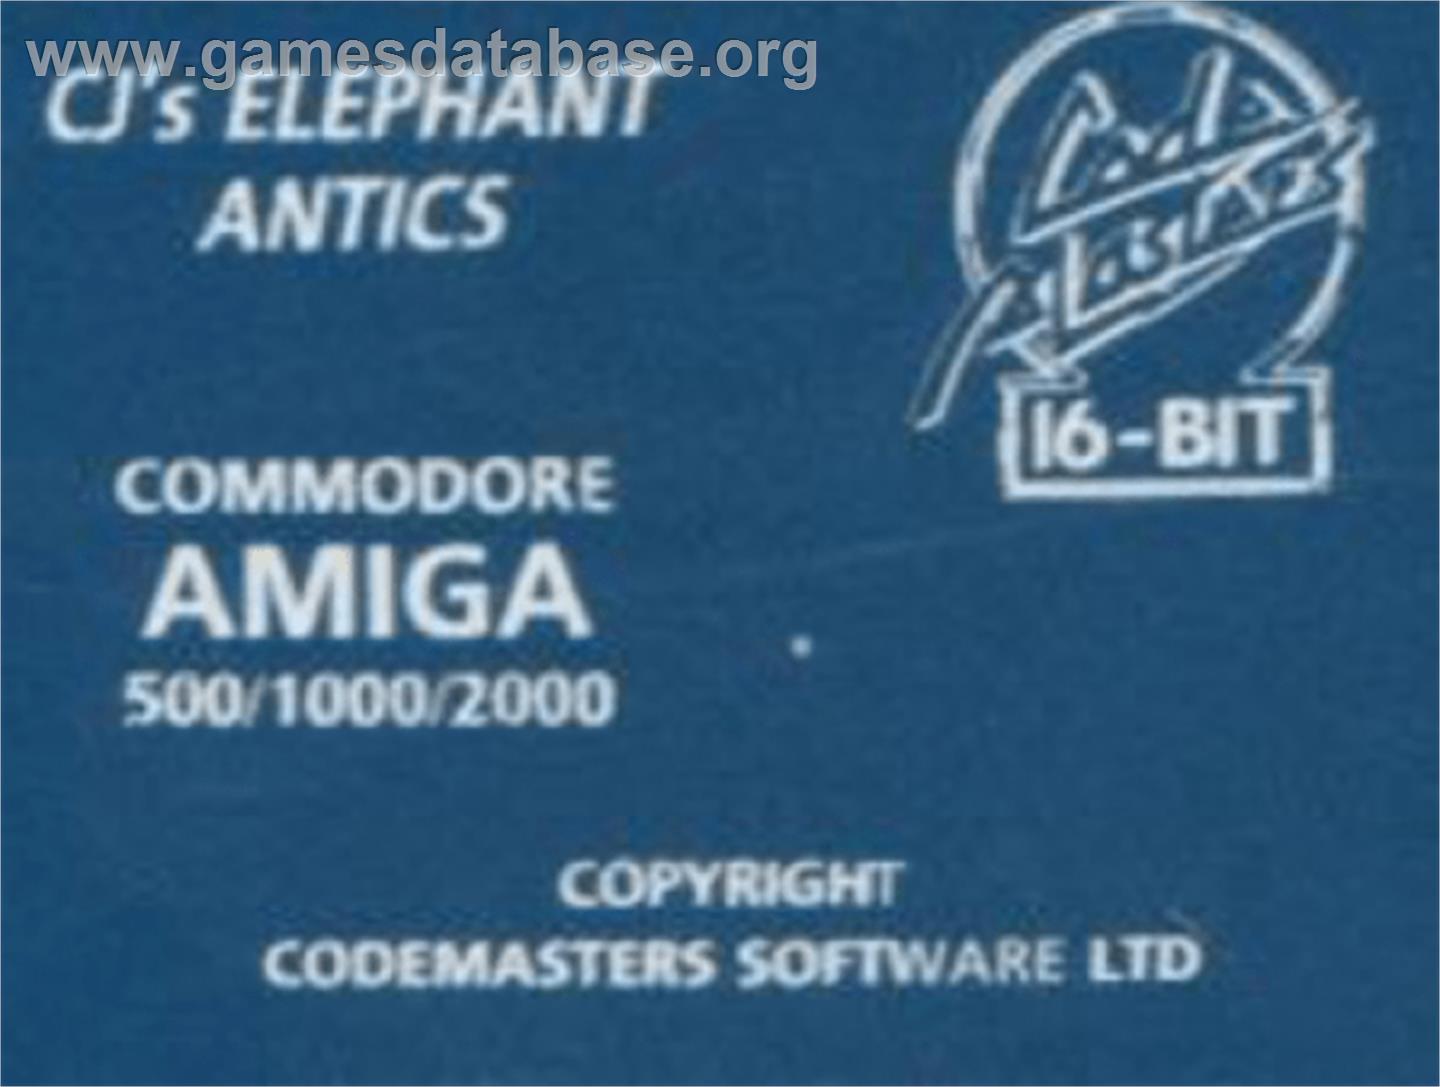 CJ's Elephant Antics - Commodore Amiga - Artwork - Cartridge Top